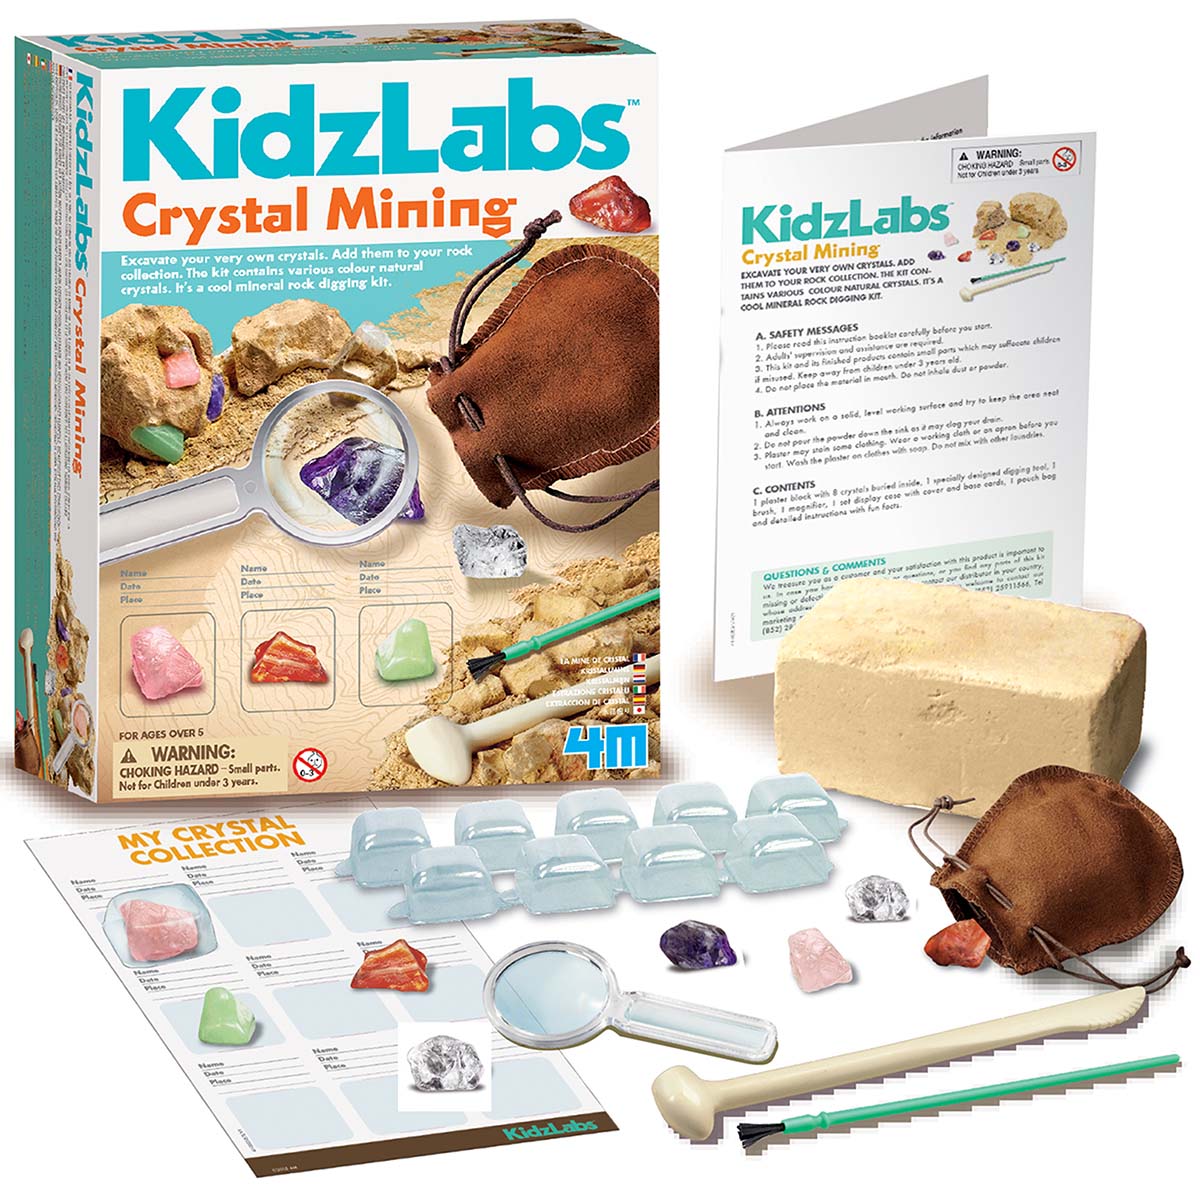 KidzLabs Crystal Mining